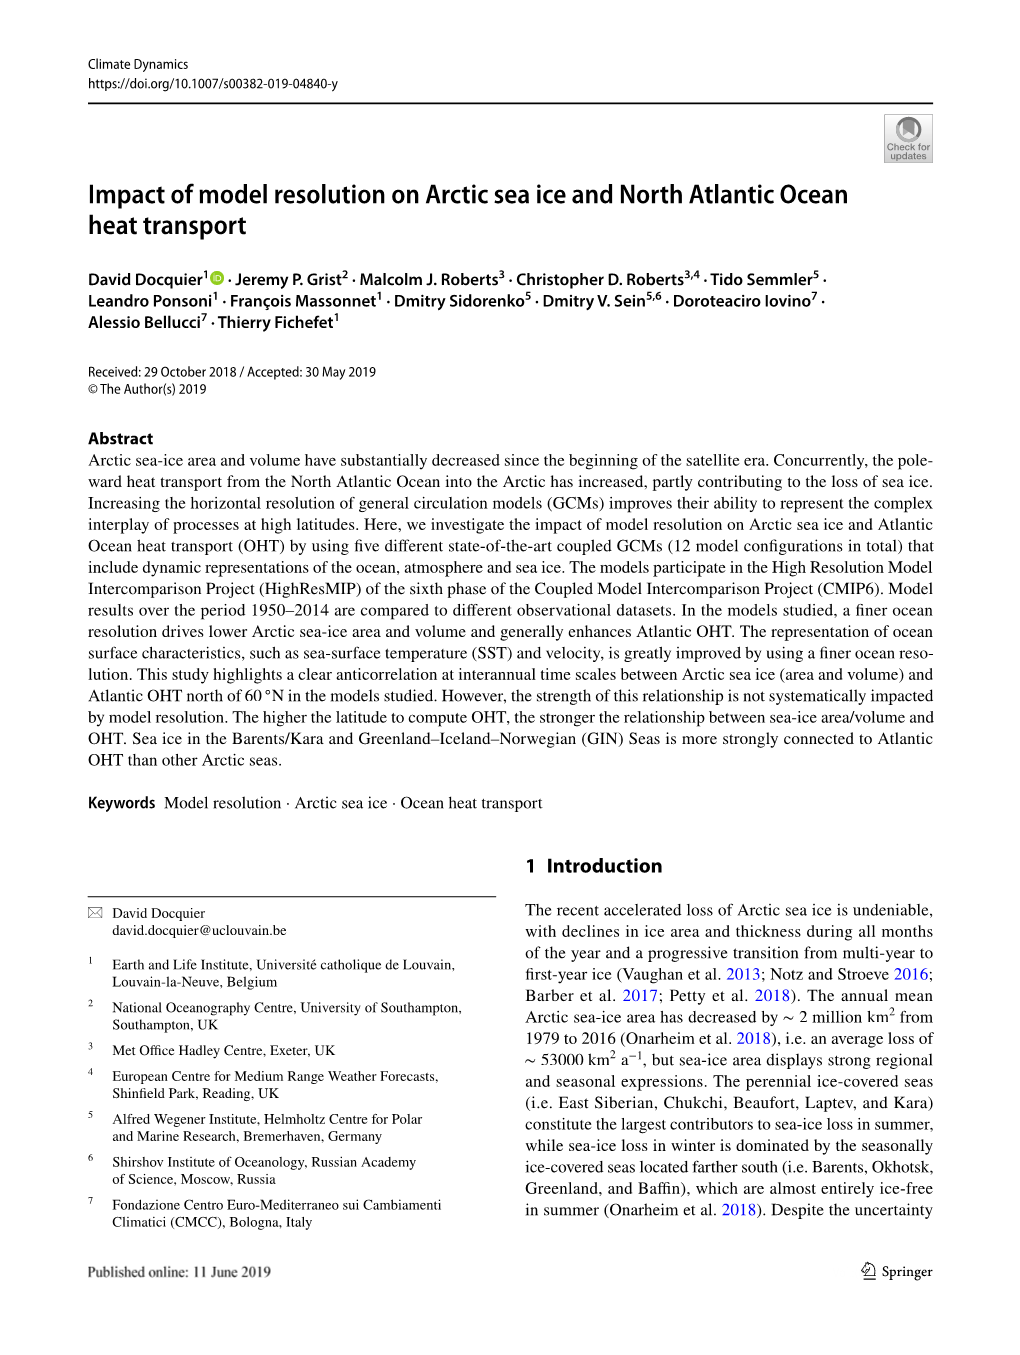 Impact of Model Resolution on Arctic Sea Ice and North Atlantic Ocean Heat Transport